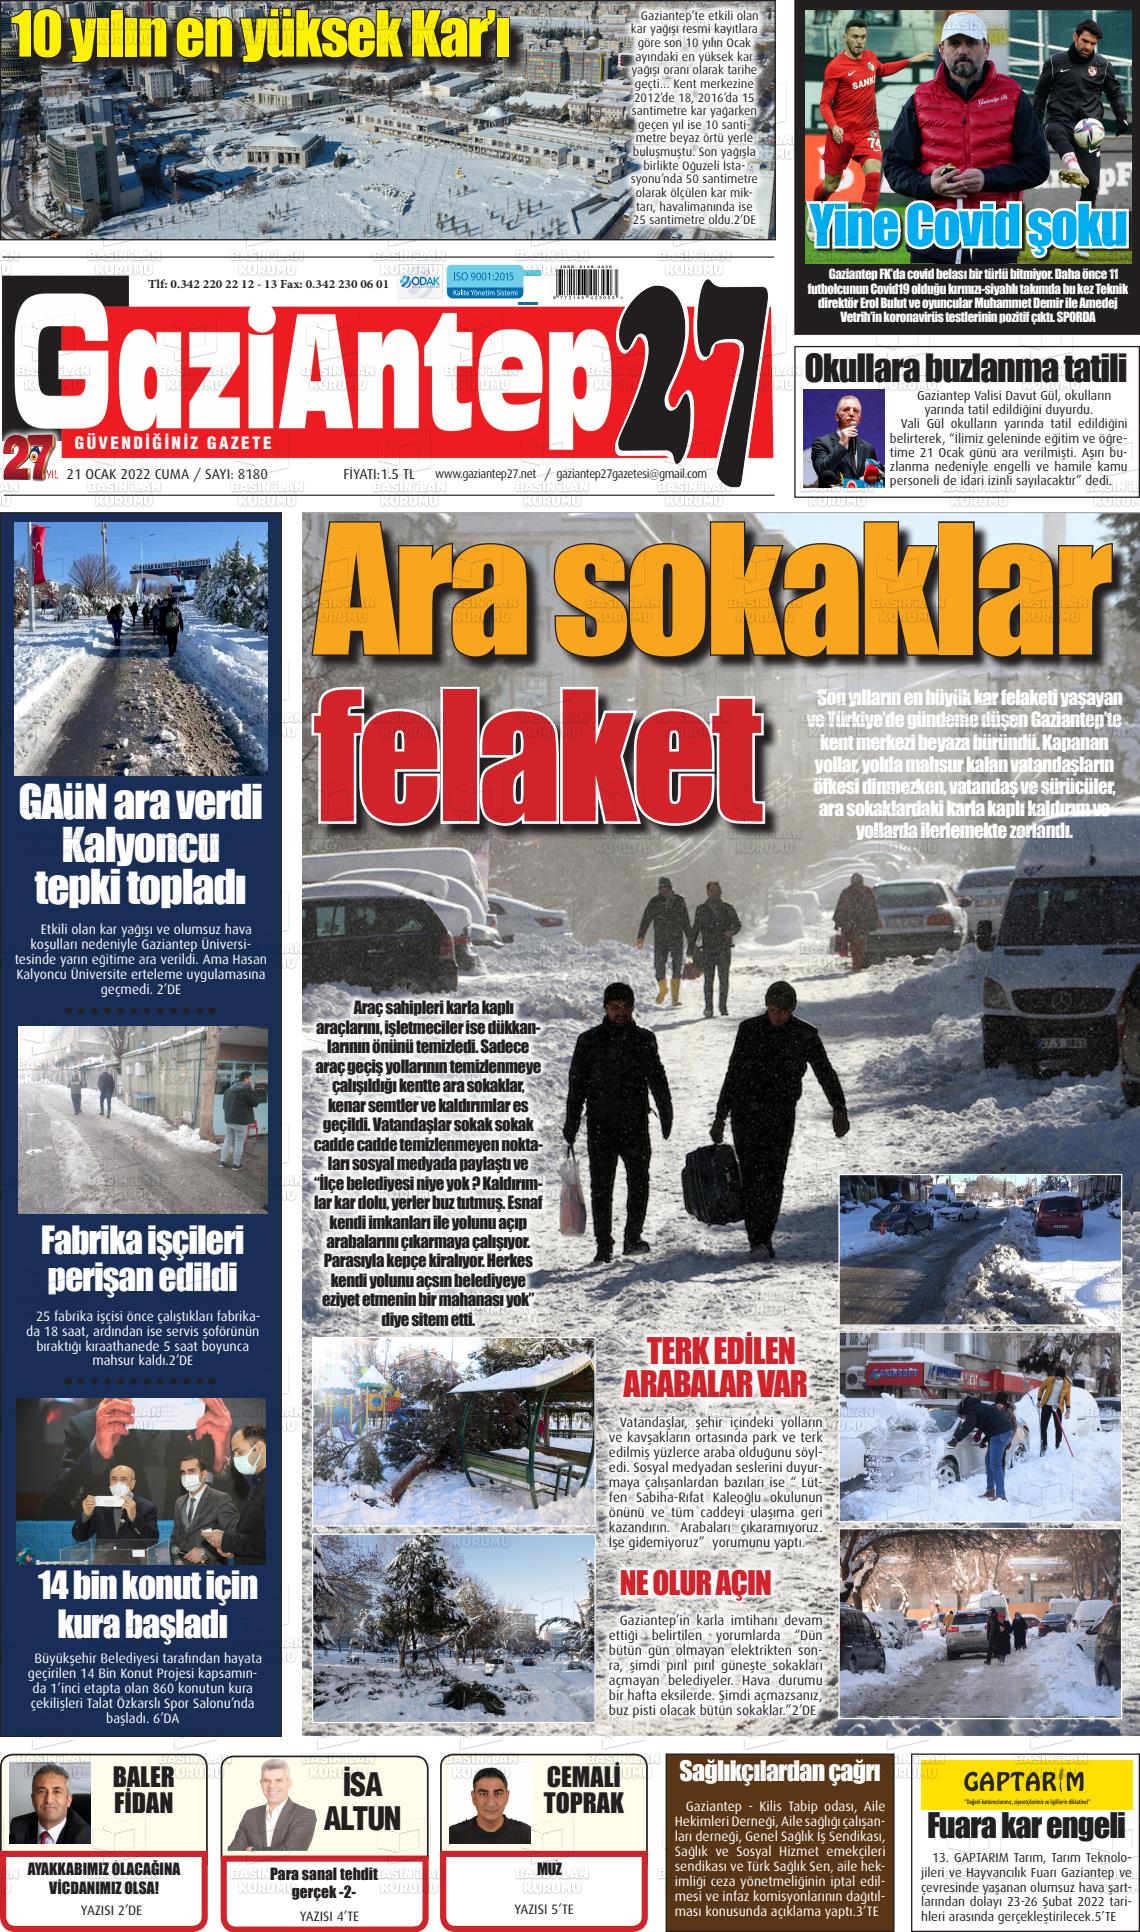 21 Ocak 2022 Gaziantep 27 Gazete Manşeti